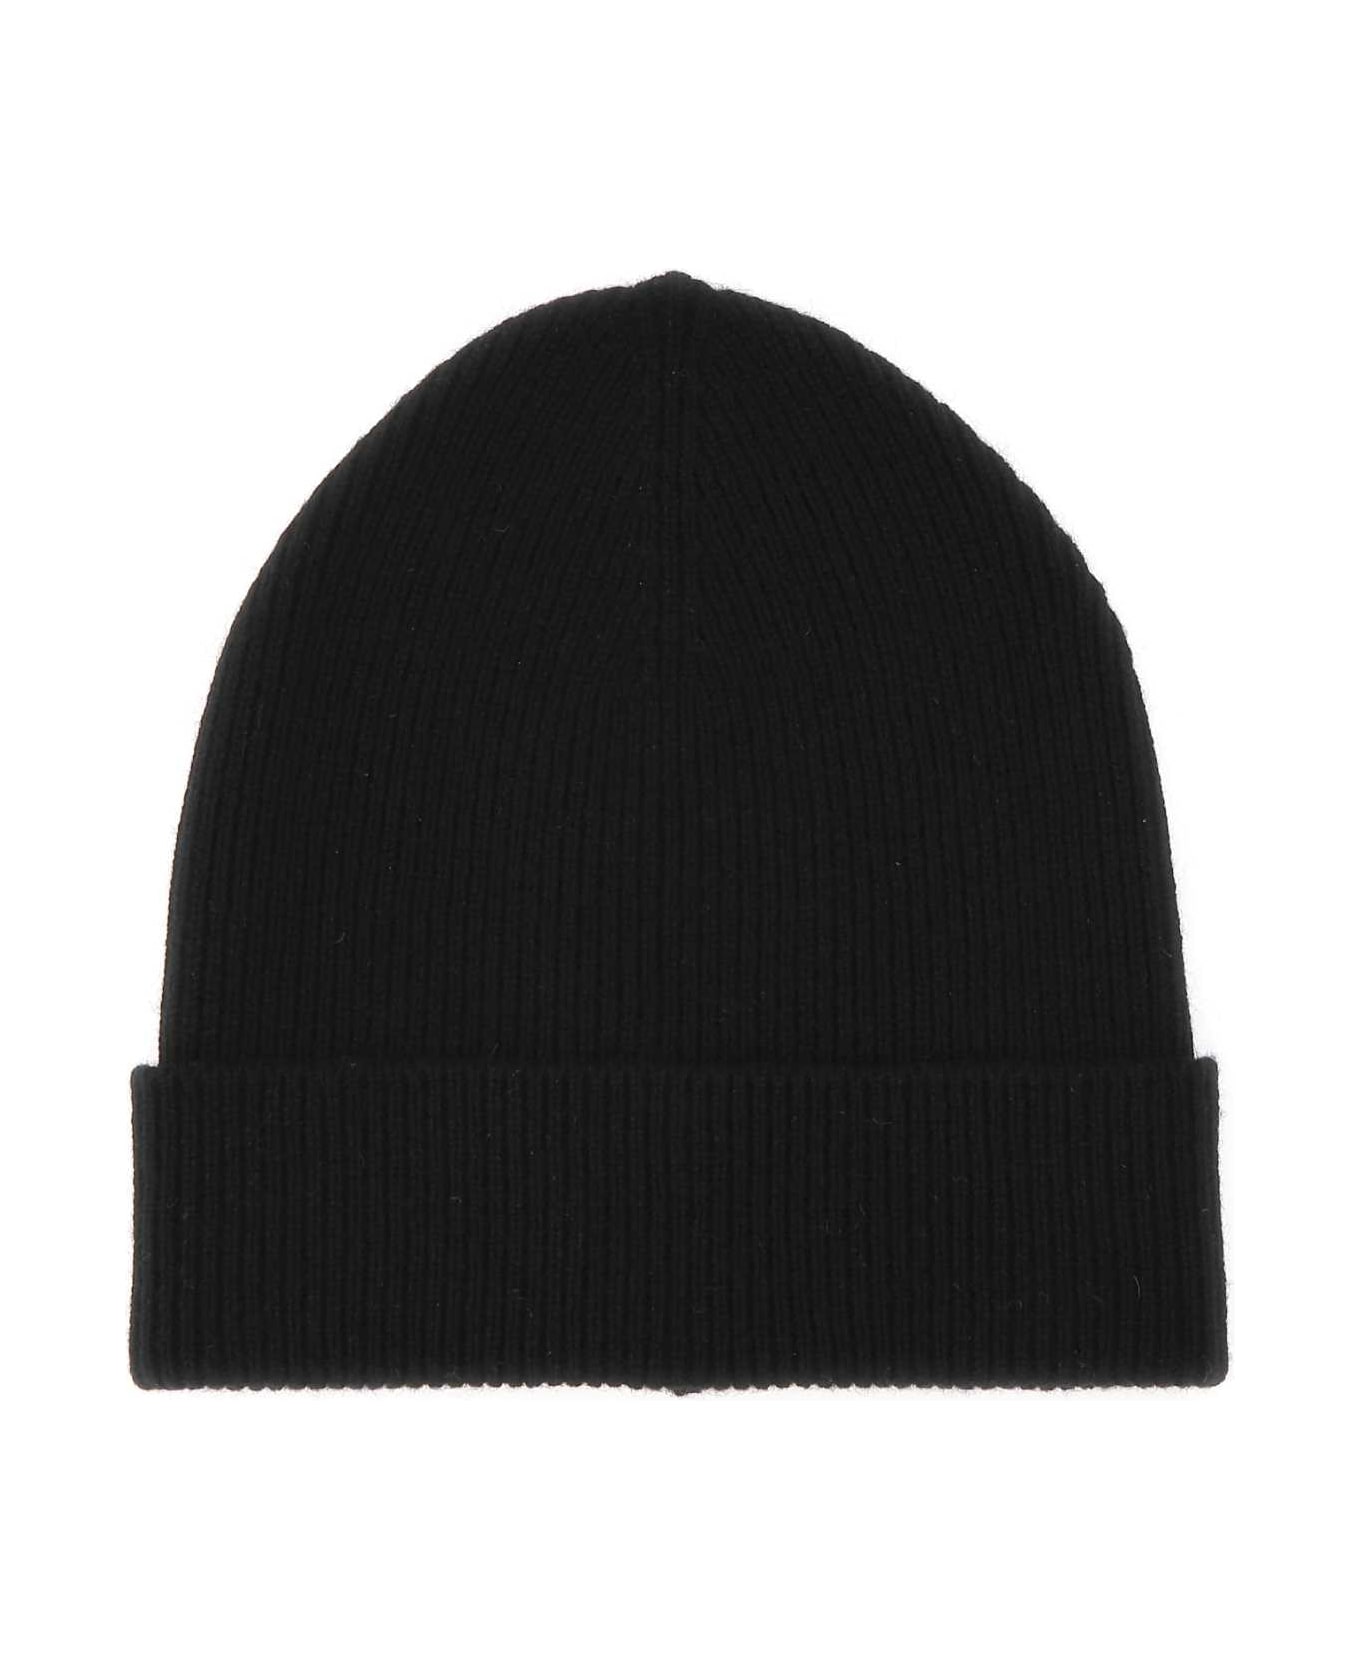 Prada Black Cashmere Beanie Hat - NERO